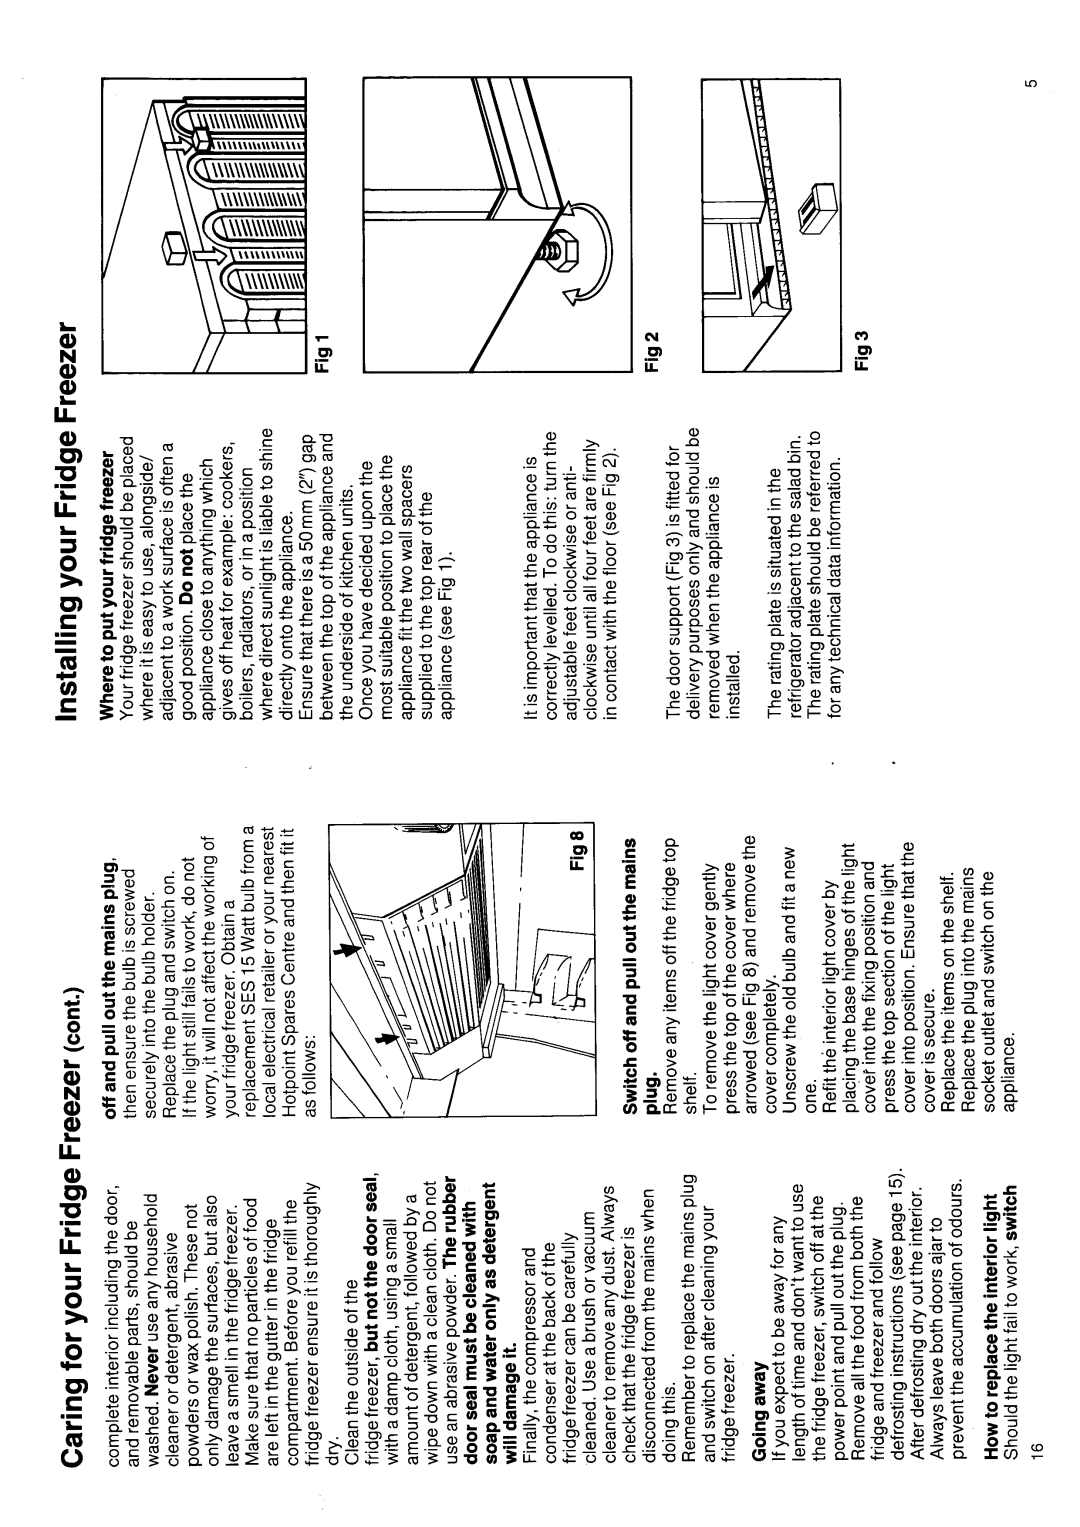 Hotpoint 8330 manual 